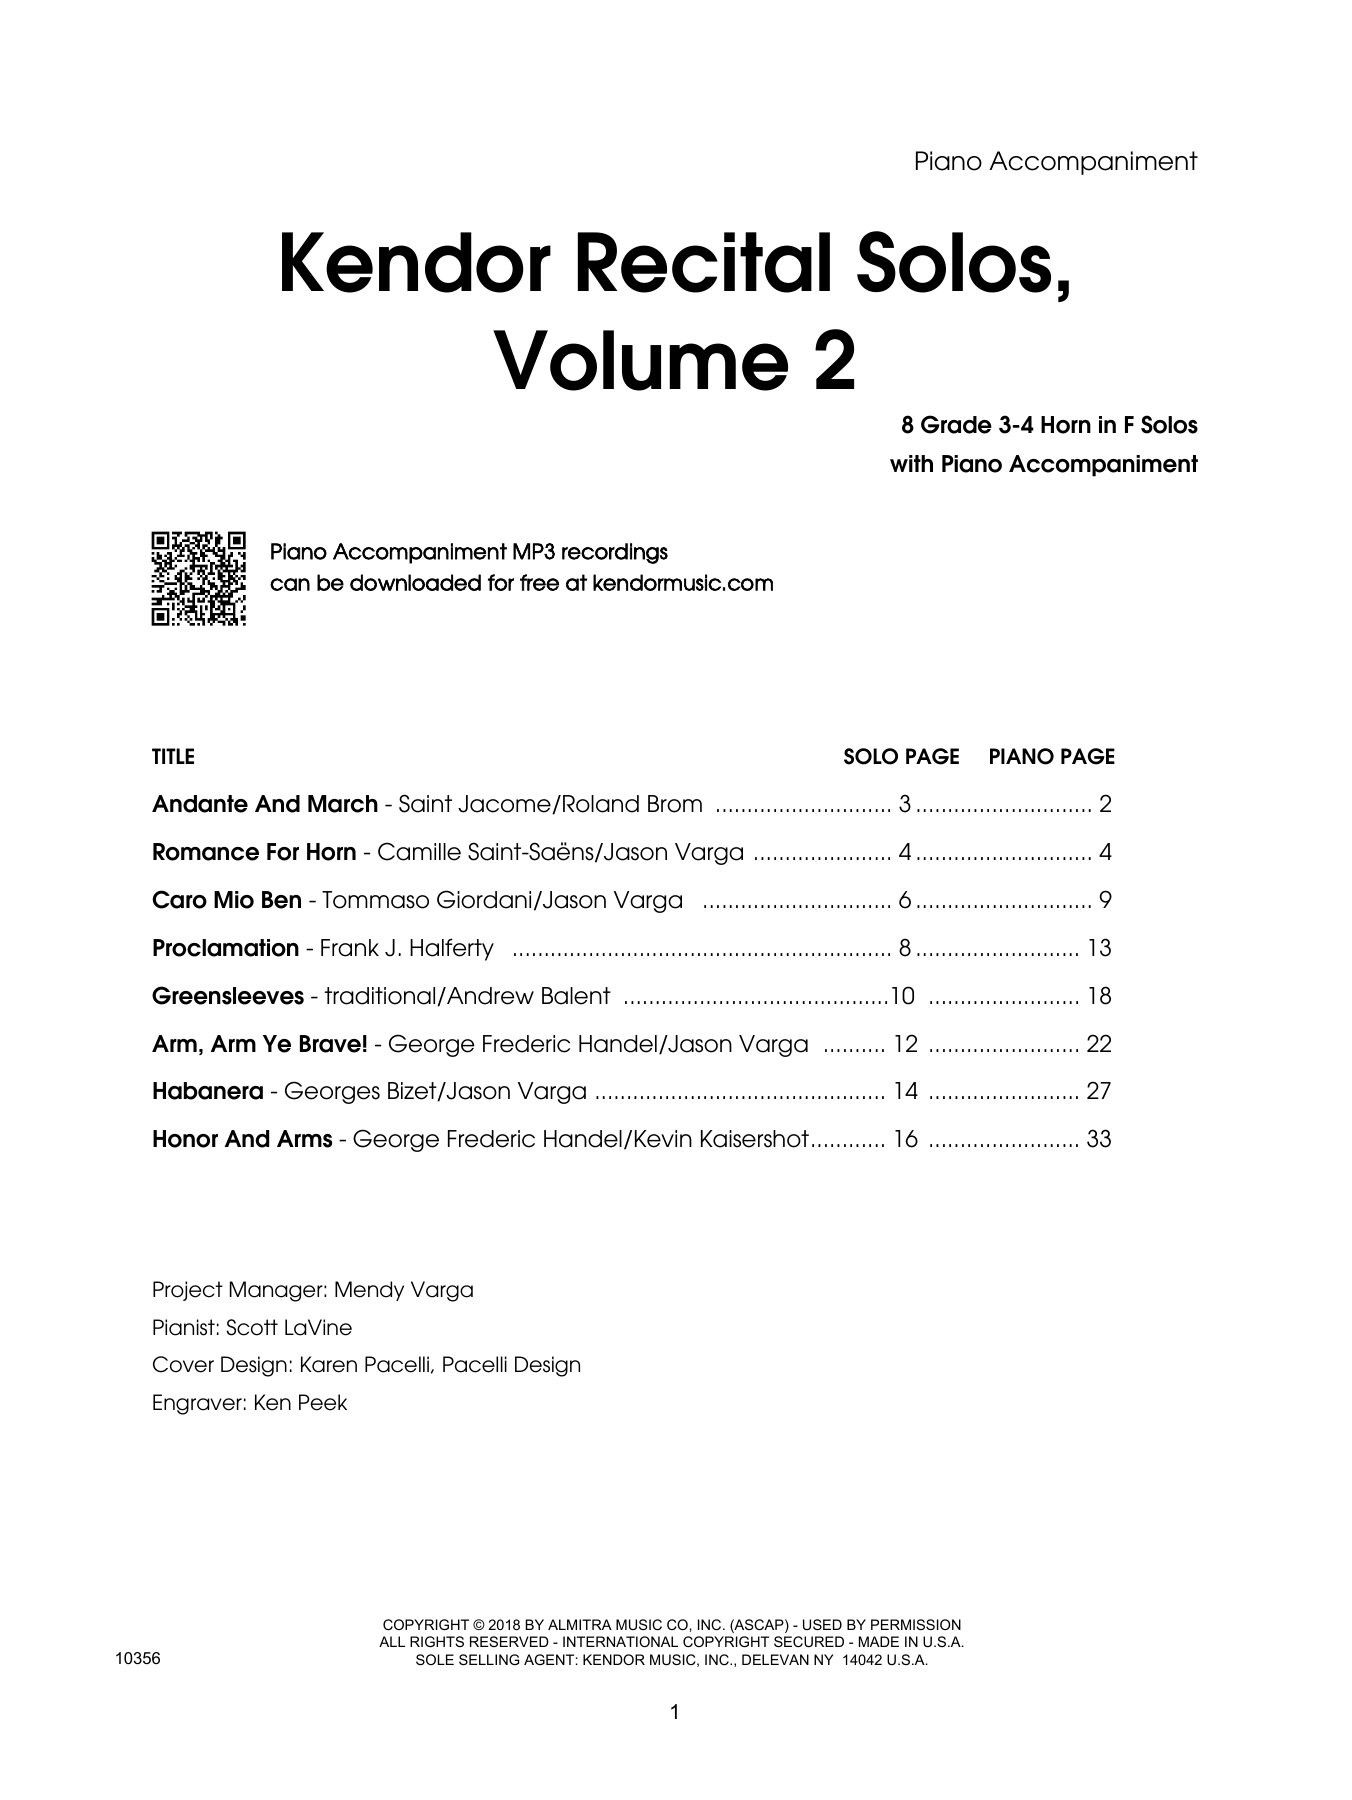 Download Various Kendor Recital Solos, Volume 2 - Piano Sheet Music